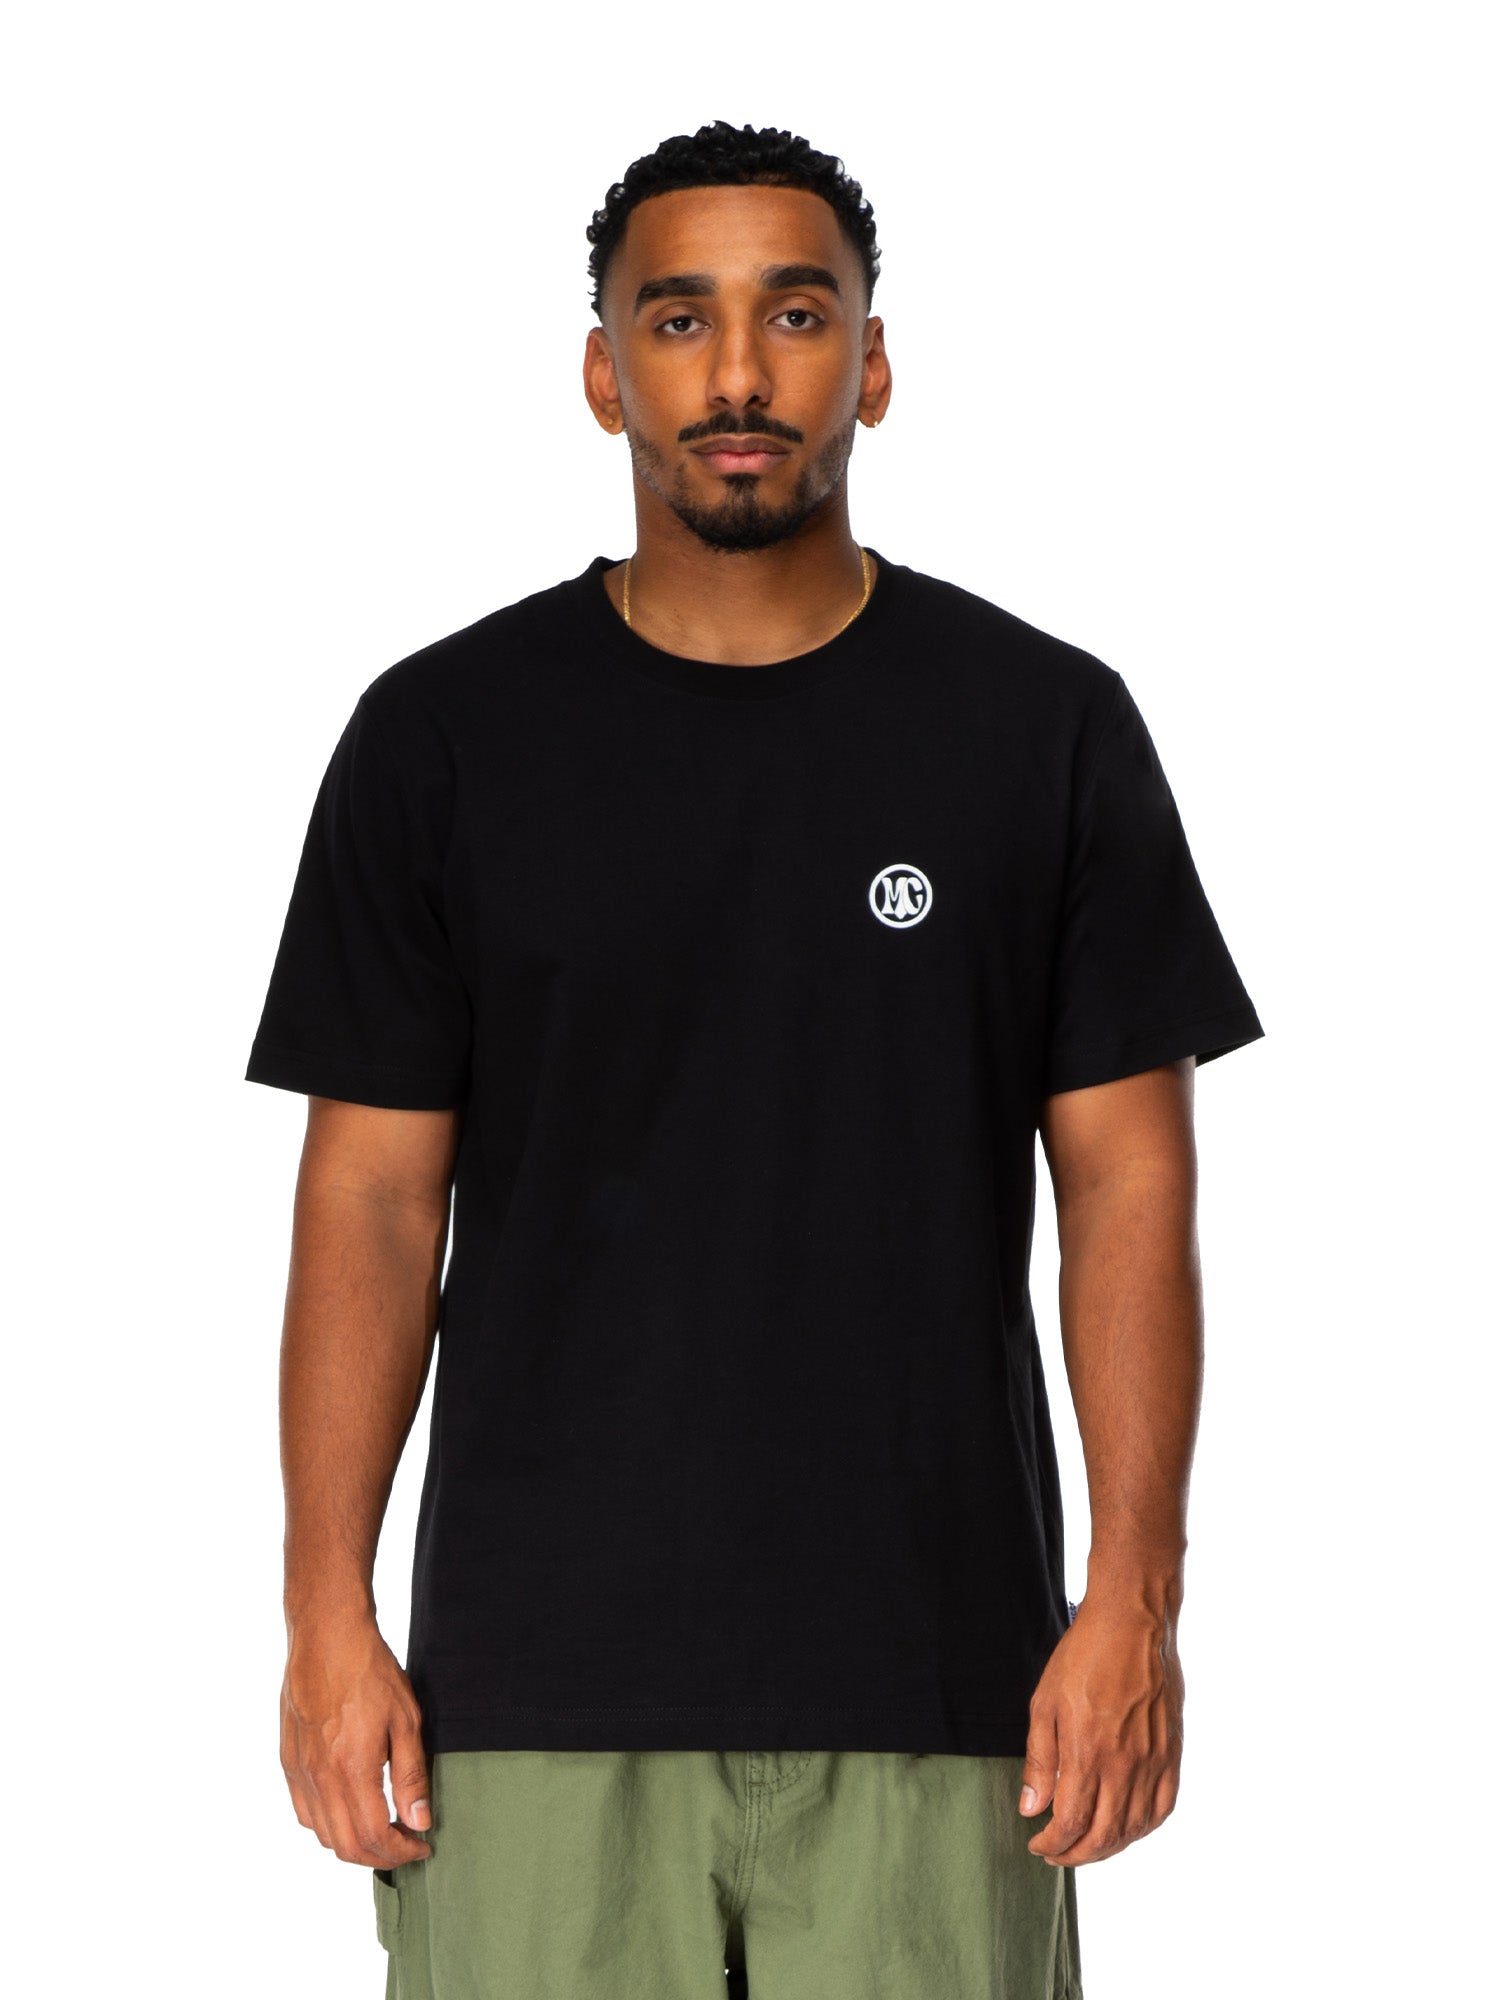 Michael - Graphic T-Shirt - Black